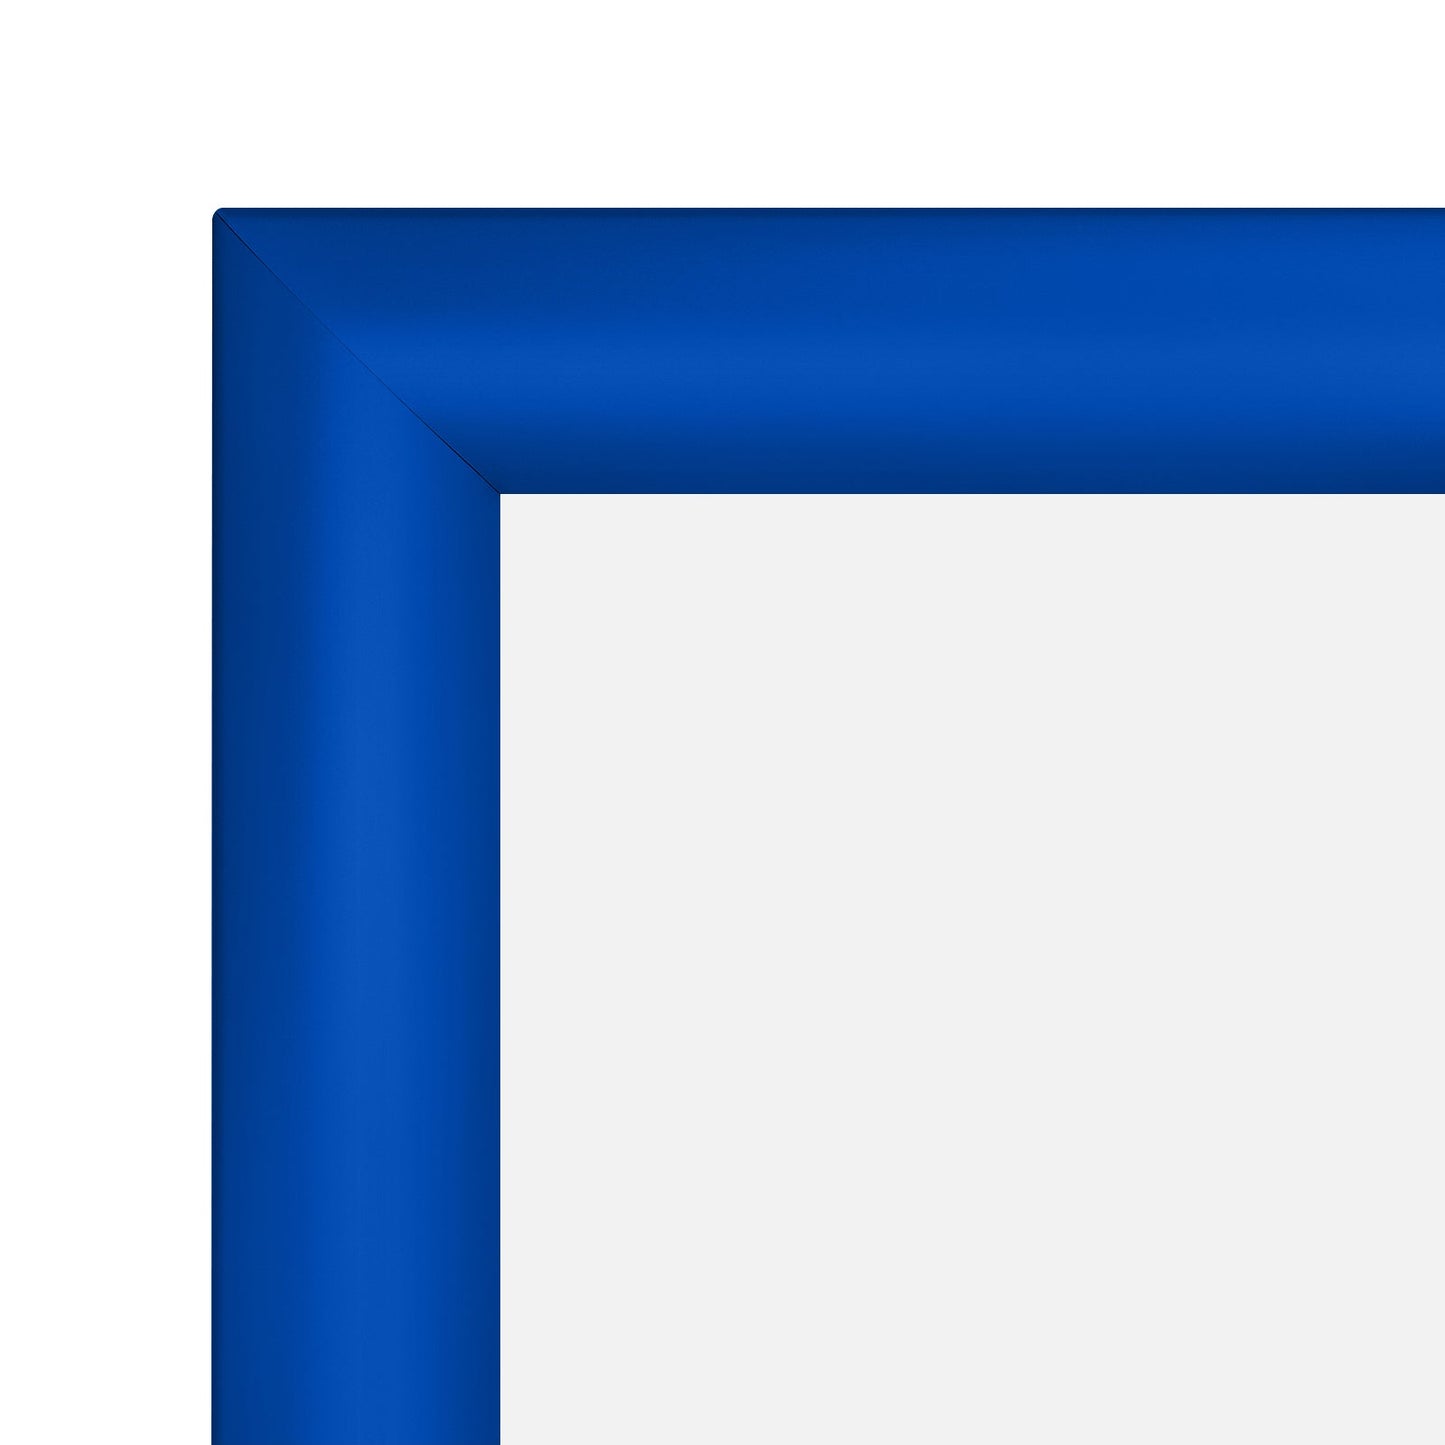 10x20 Blue SnapeZo® Snap Frame - 1.2" Profile